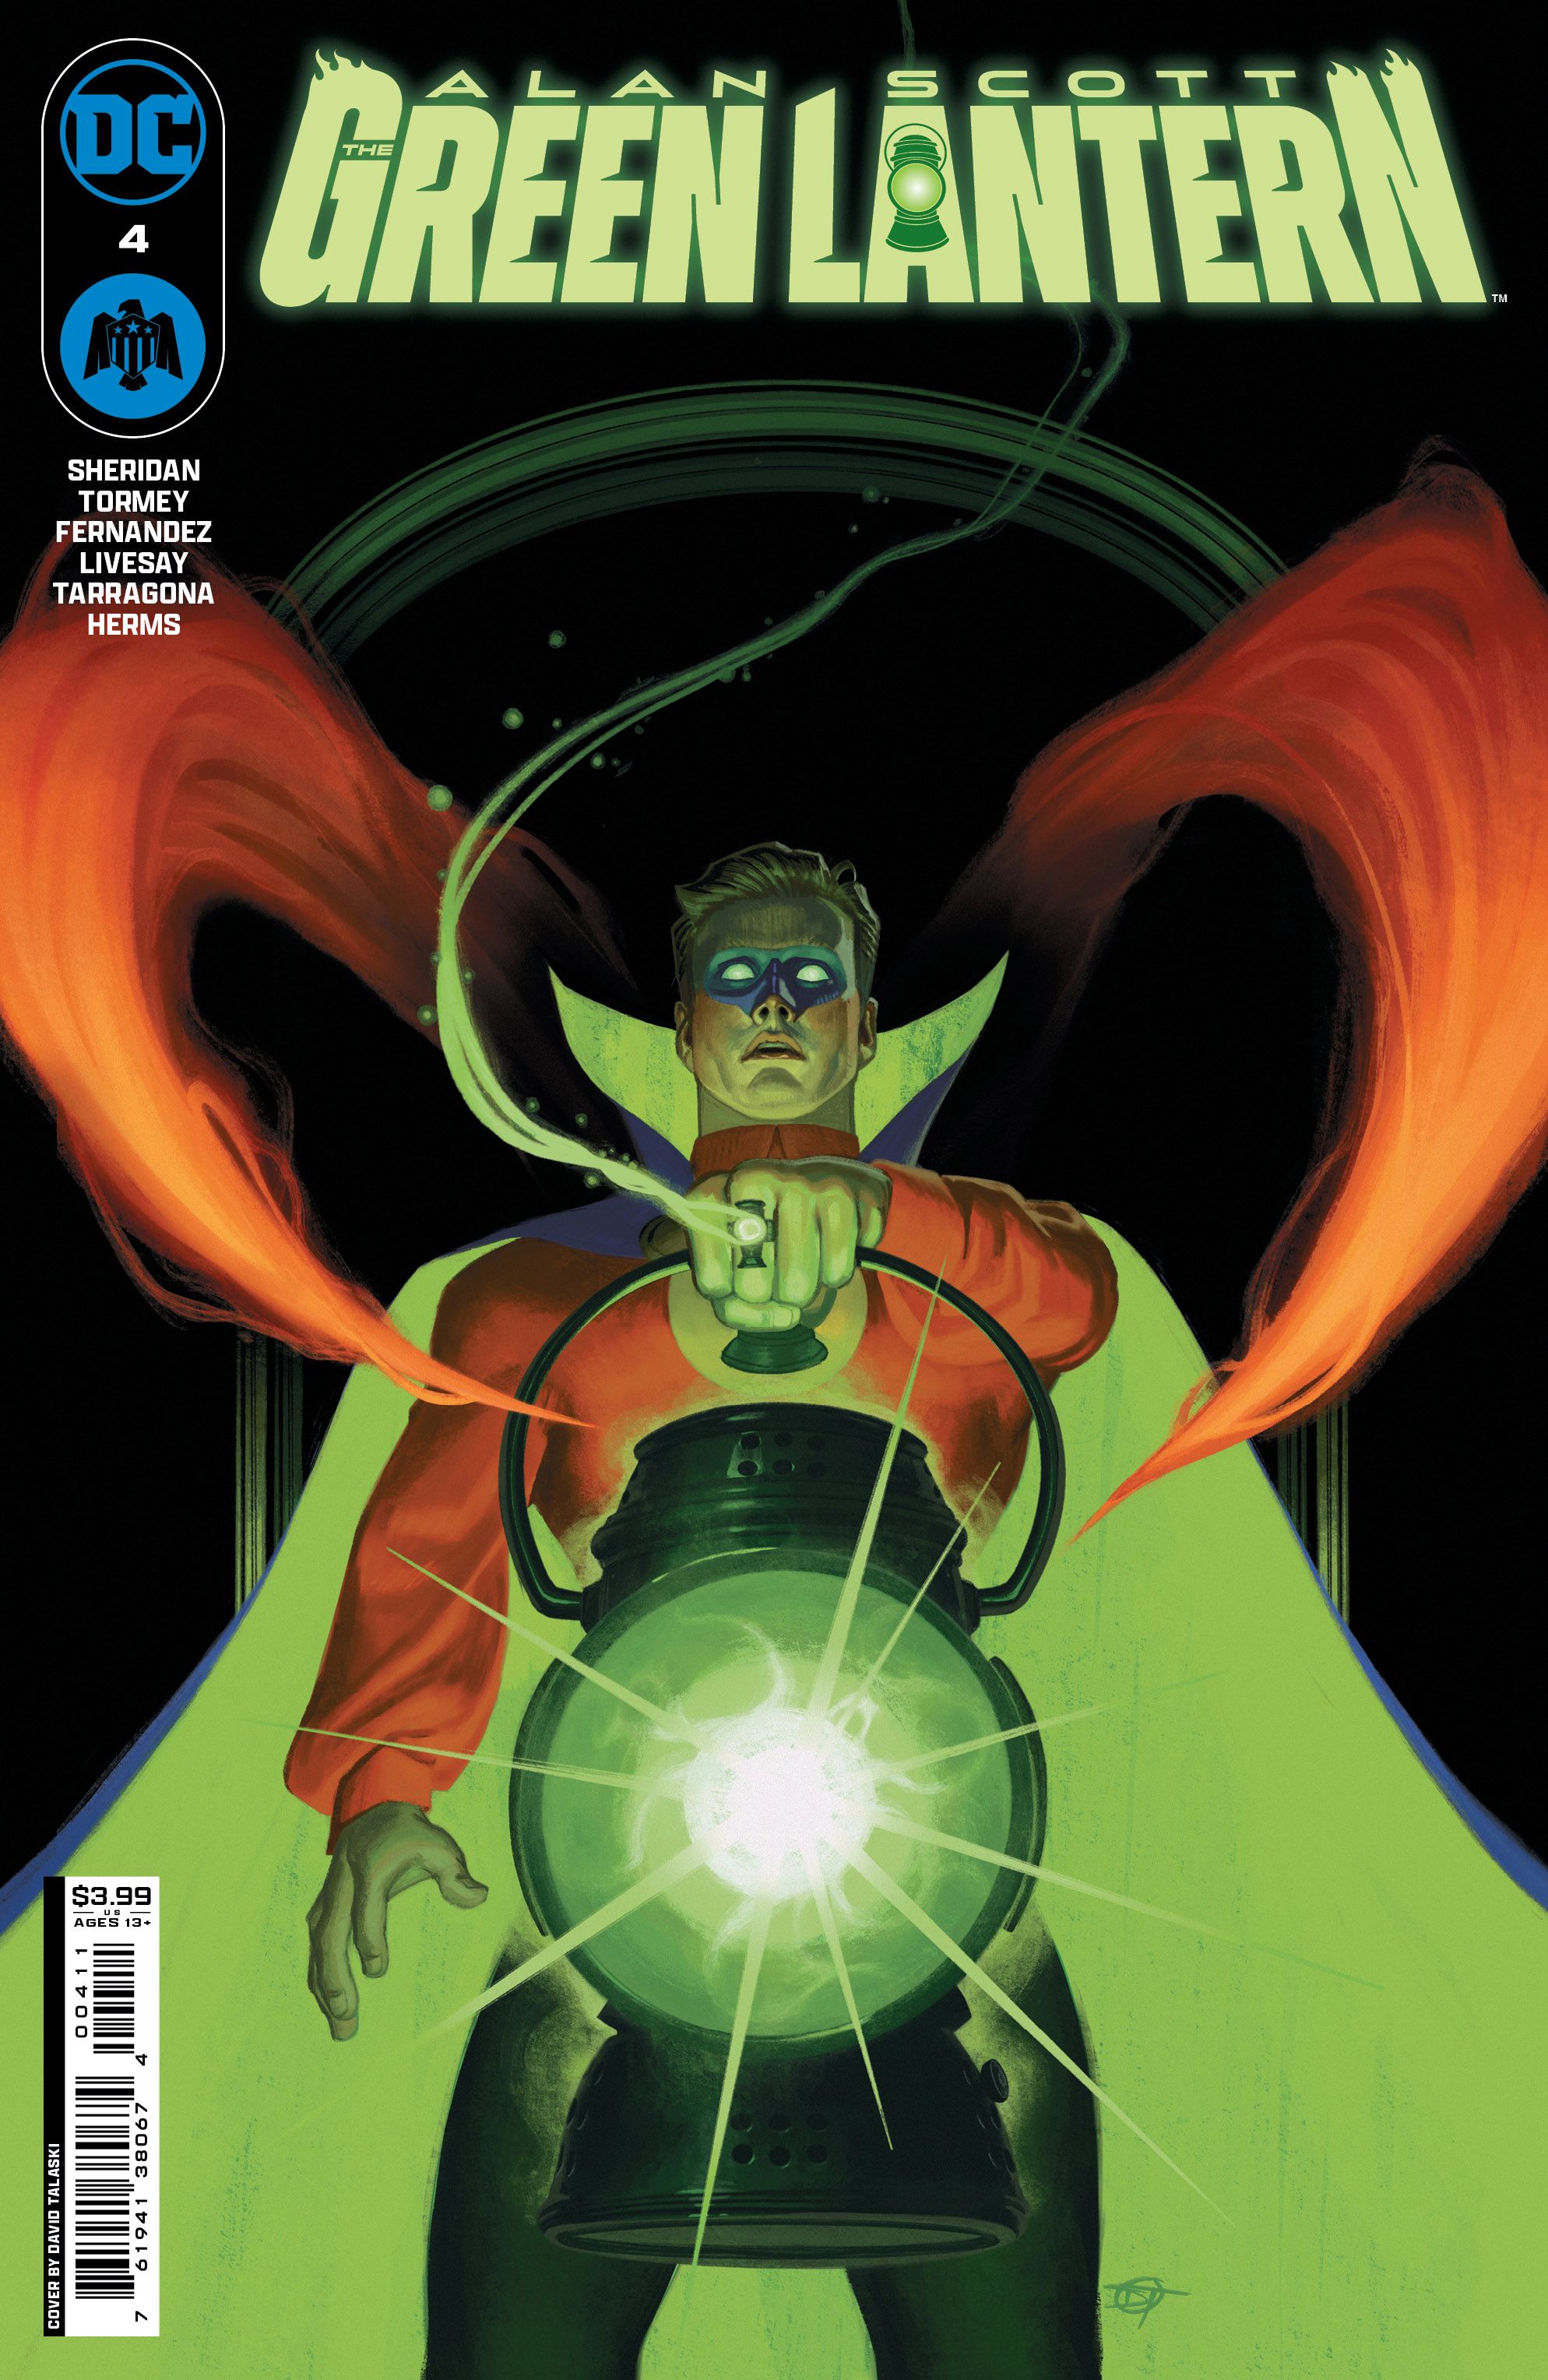 Alan Scott: The Green Lantern #4 Comic